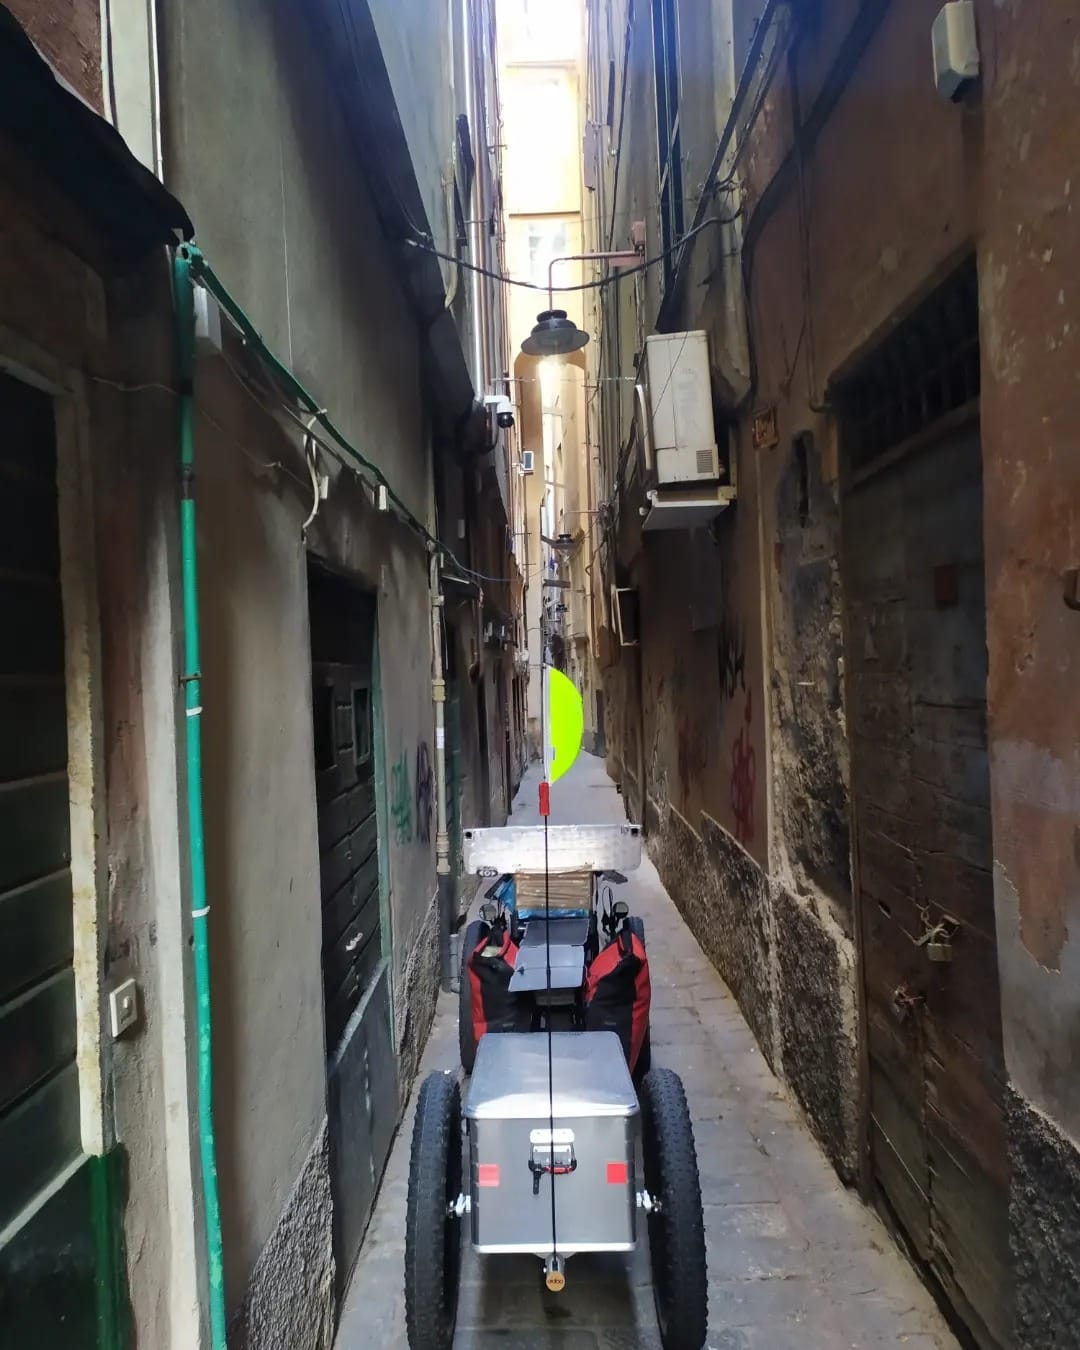 Riding through narrow streets of Italian village